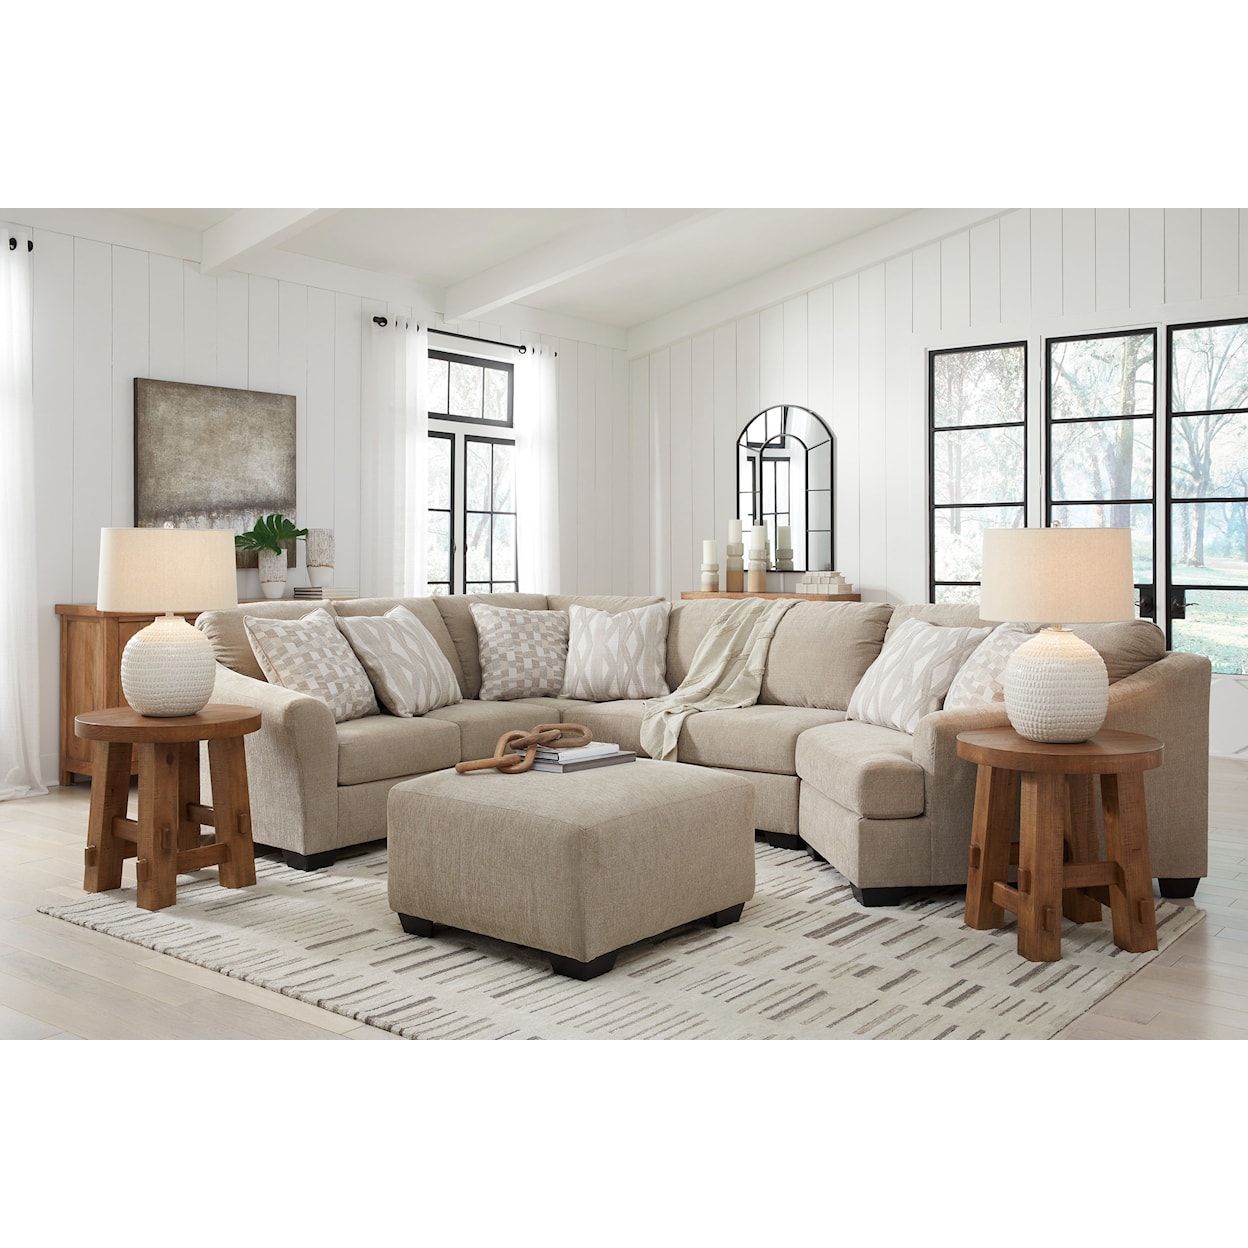 Ashley Furniture Signature Design Brogan Bay Living Room Set